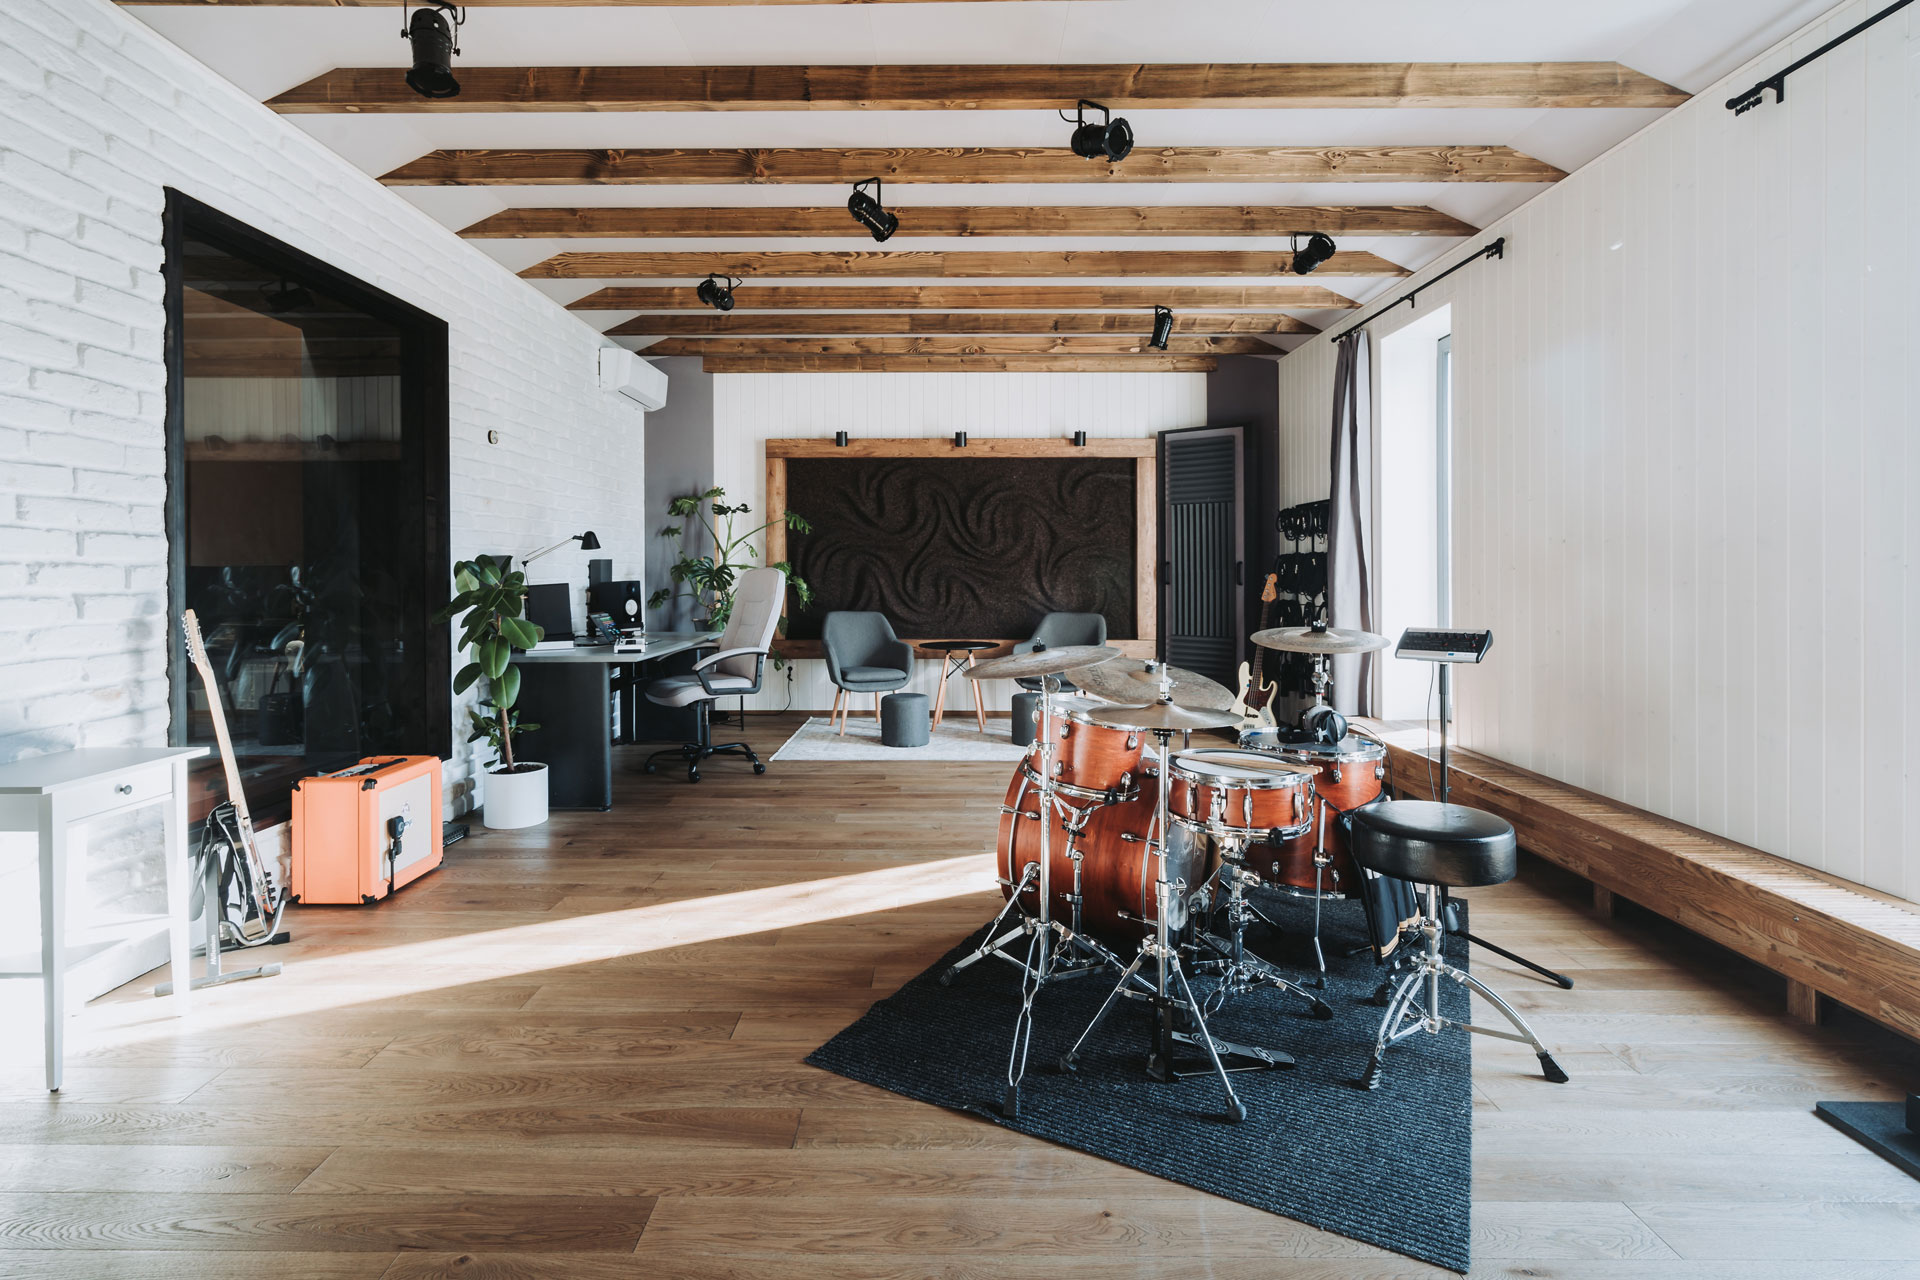 Live Recording Room in a Music Studio